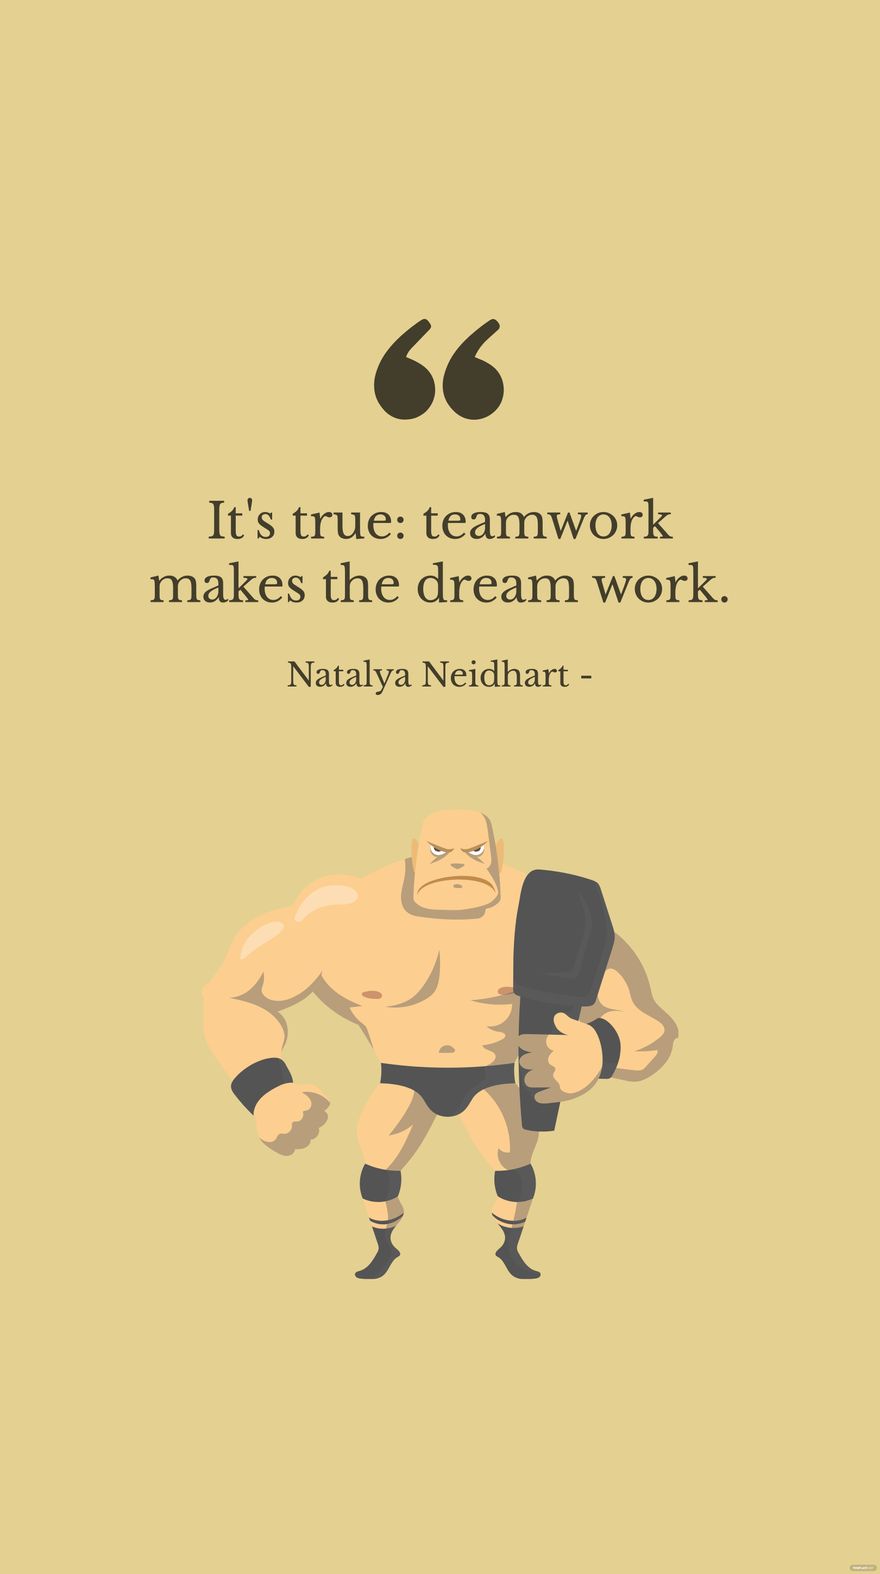 Free Natalya Neidhart - It's true: teamwork makes the dream work. in JPG